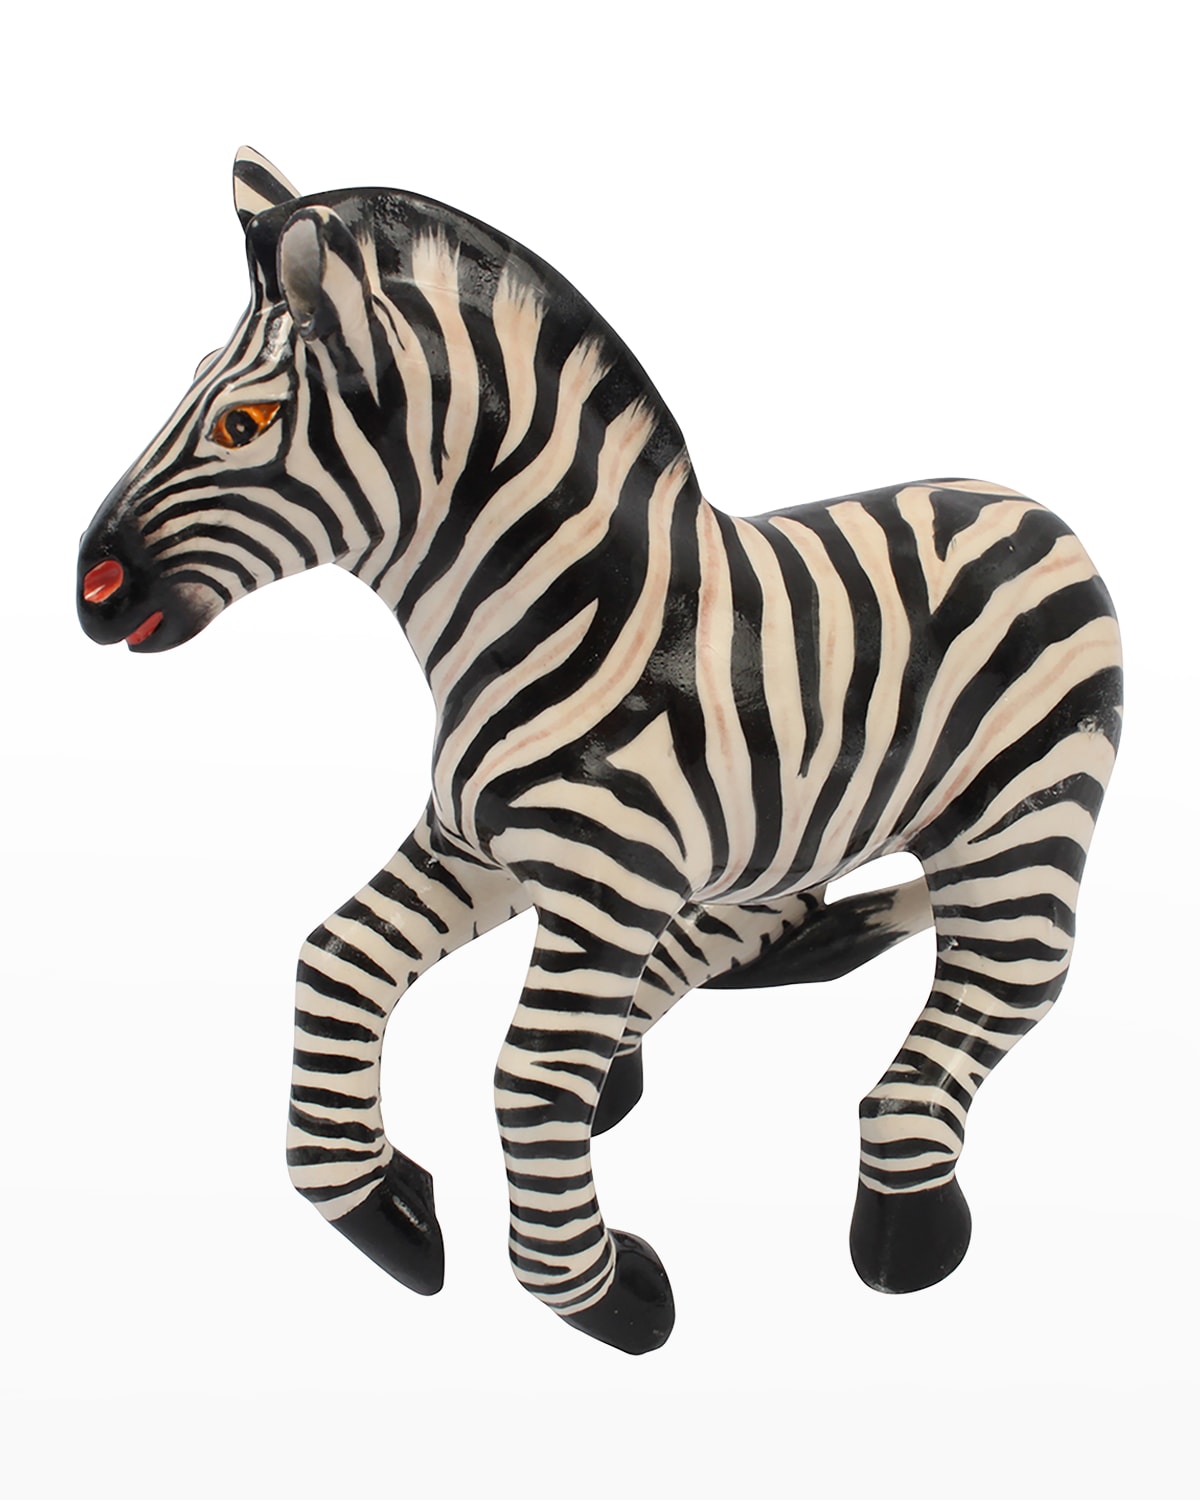 Zebra Ceramic Sculpture